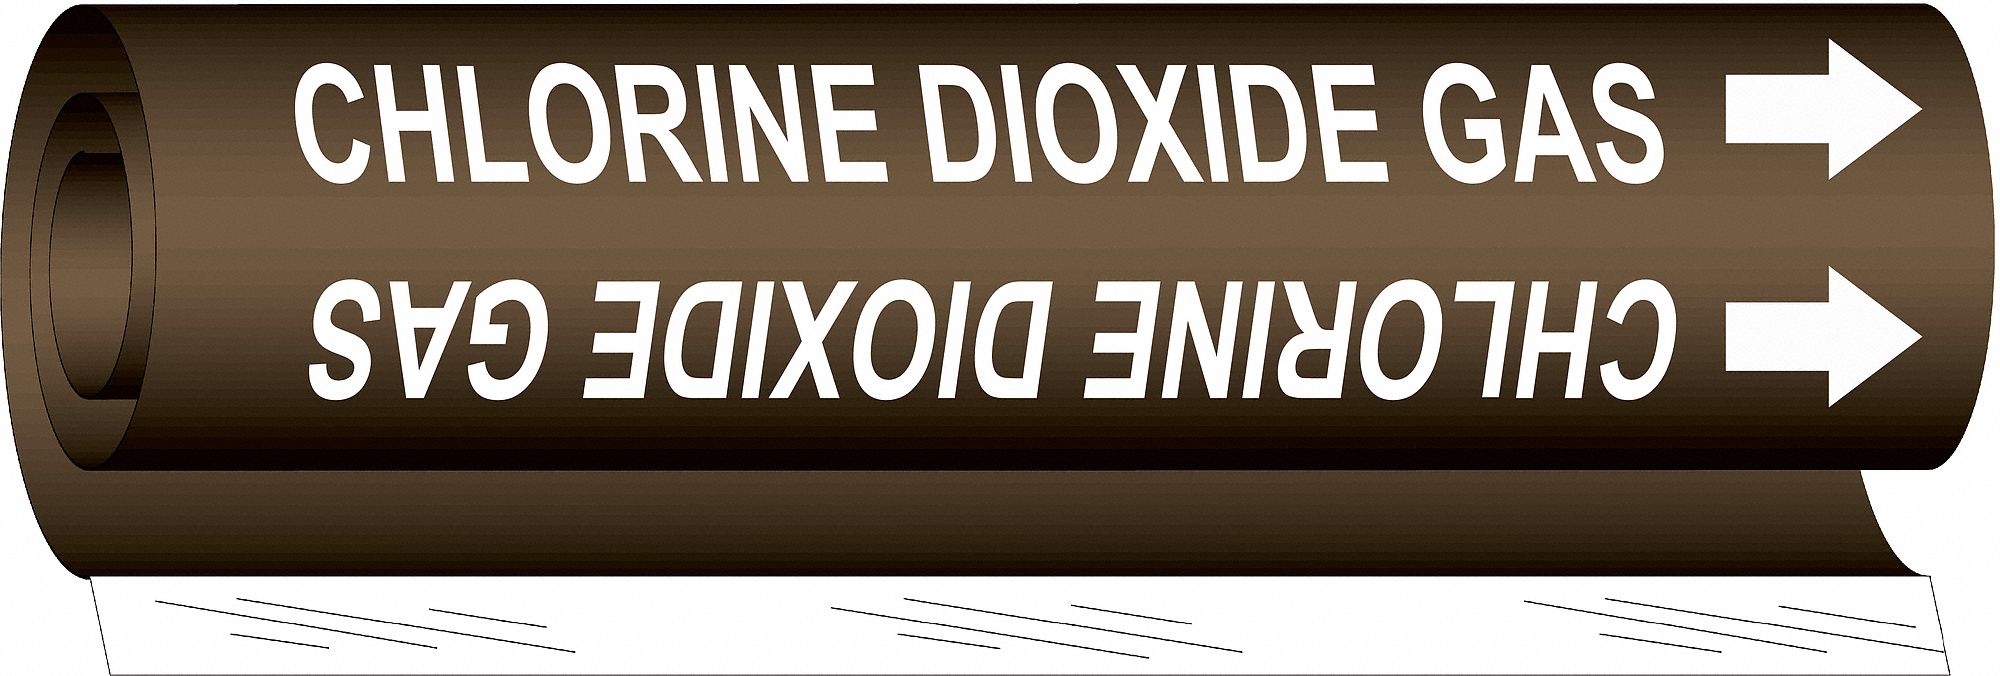 Pipe Marker,Chlorine Dioxide Gas